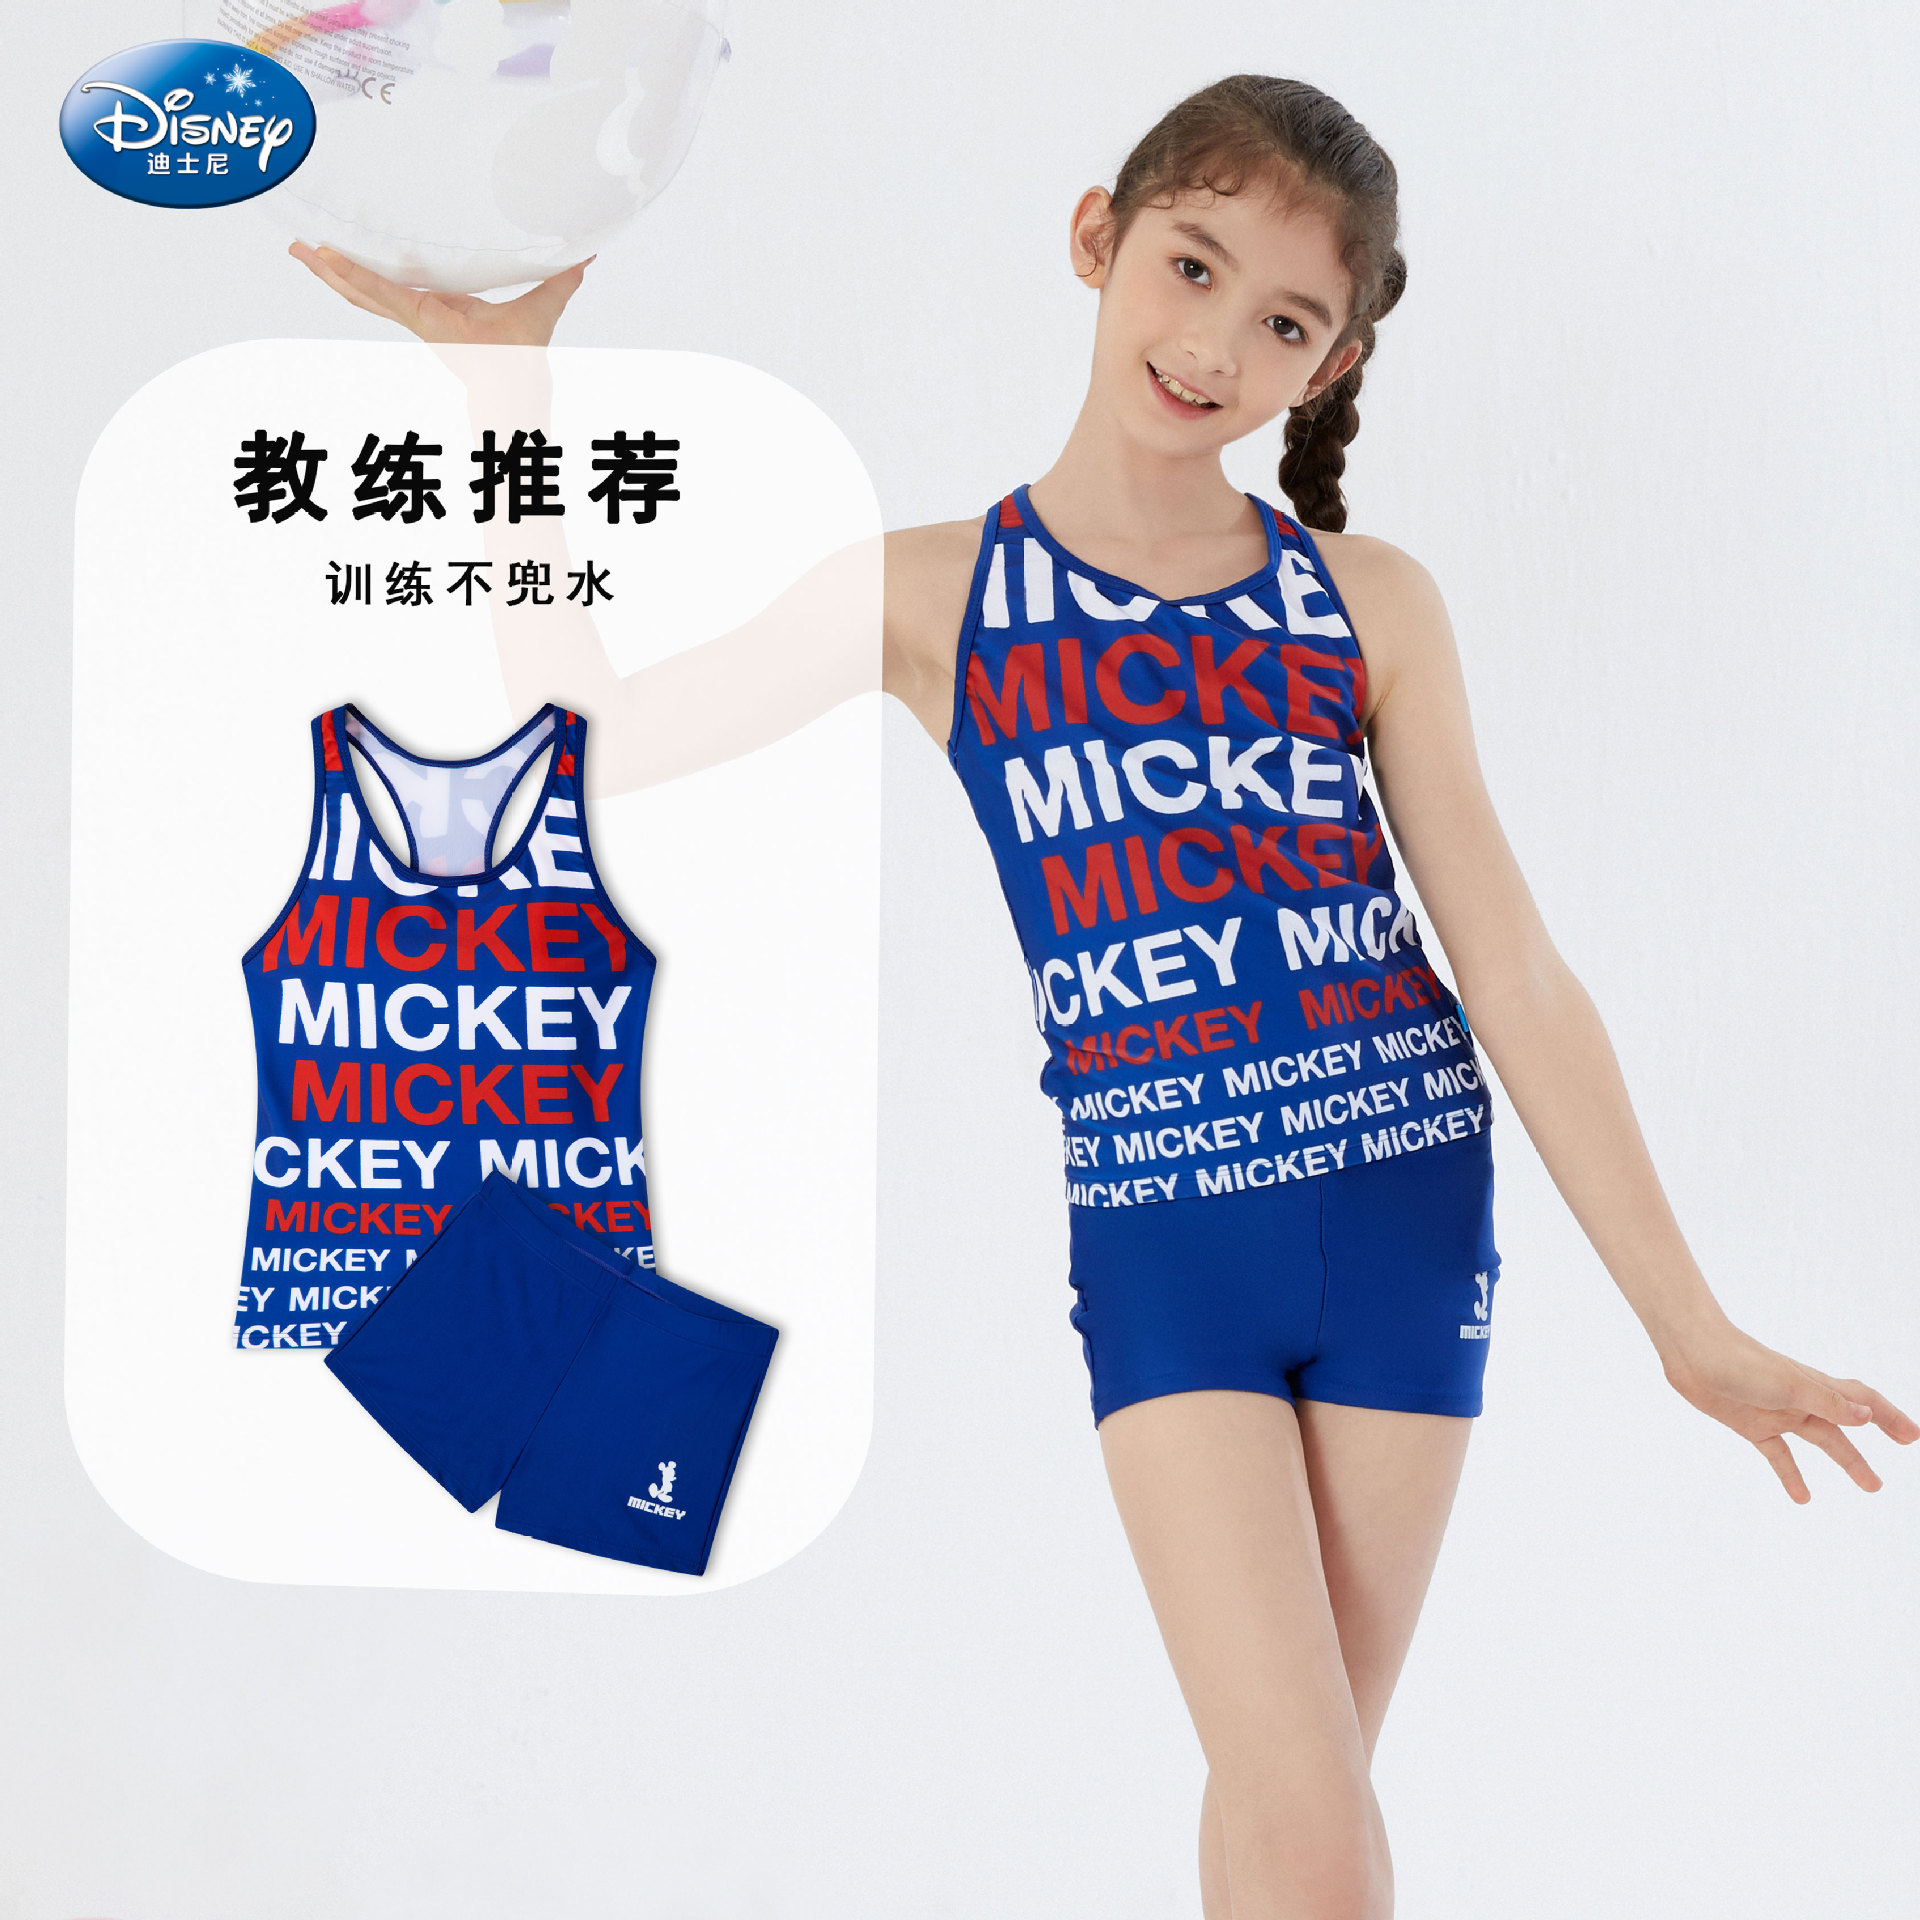 95-150cm Kids Swimwear Disney One-piece Swimsuit Covers The Belly